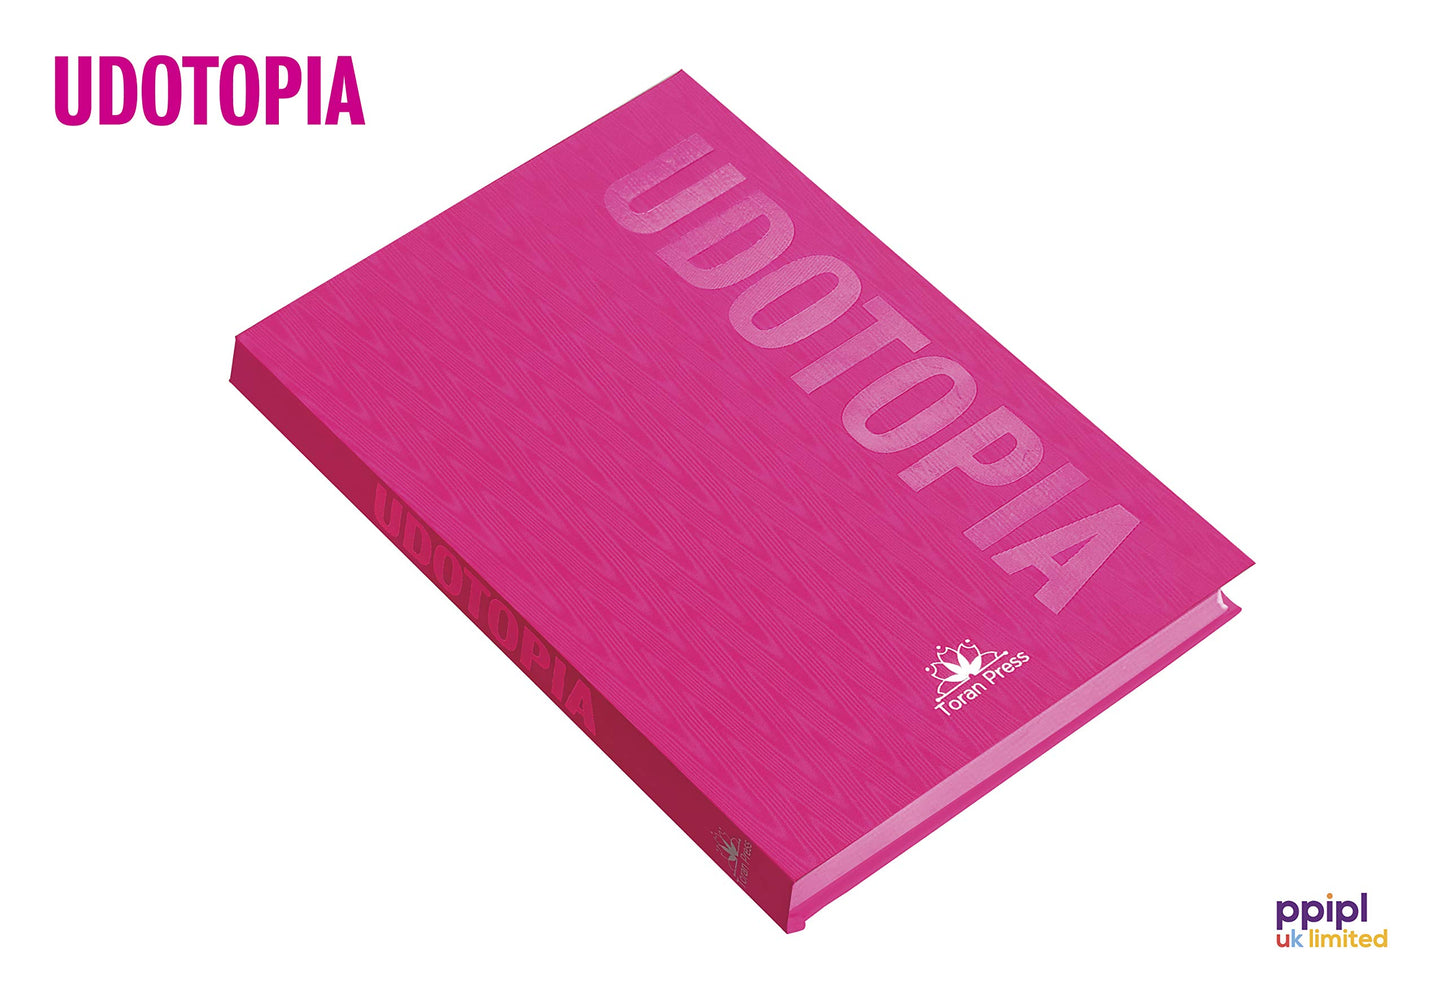 Udotopia [Hardcover]